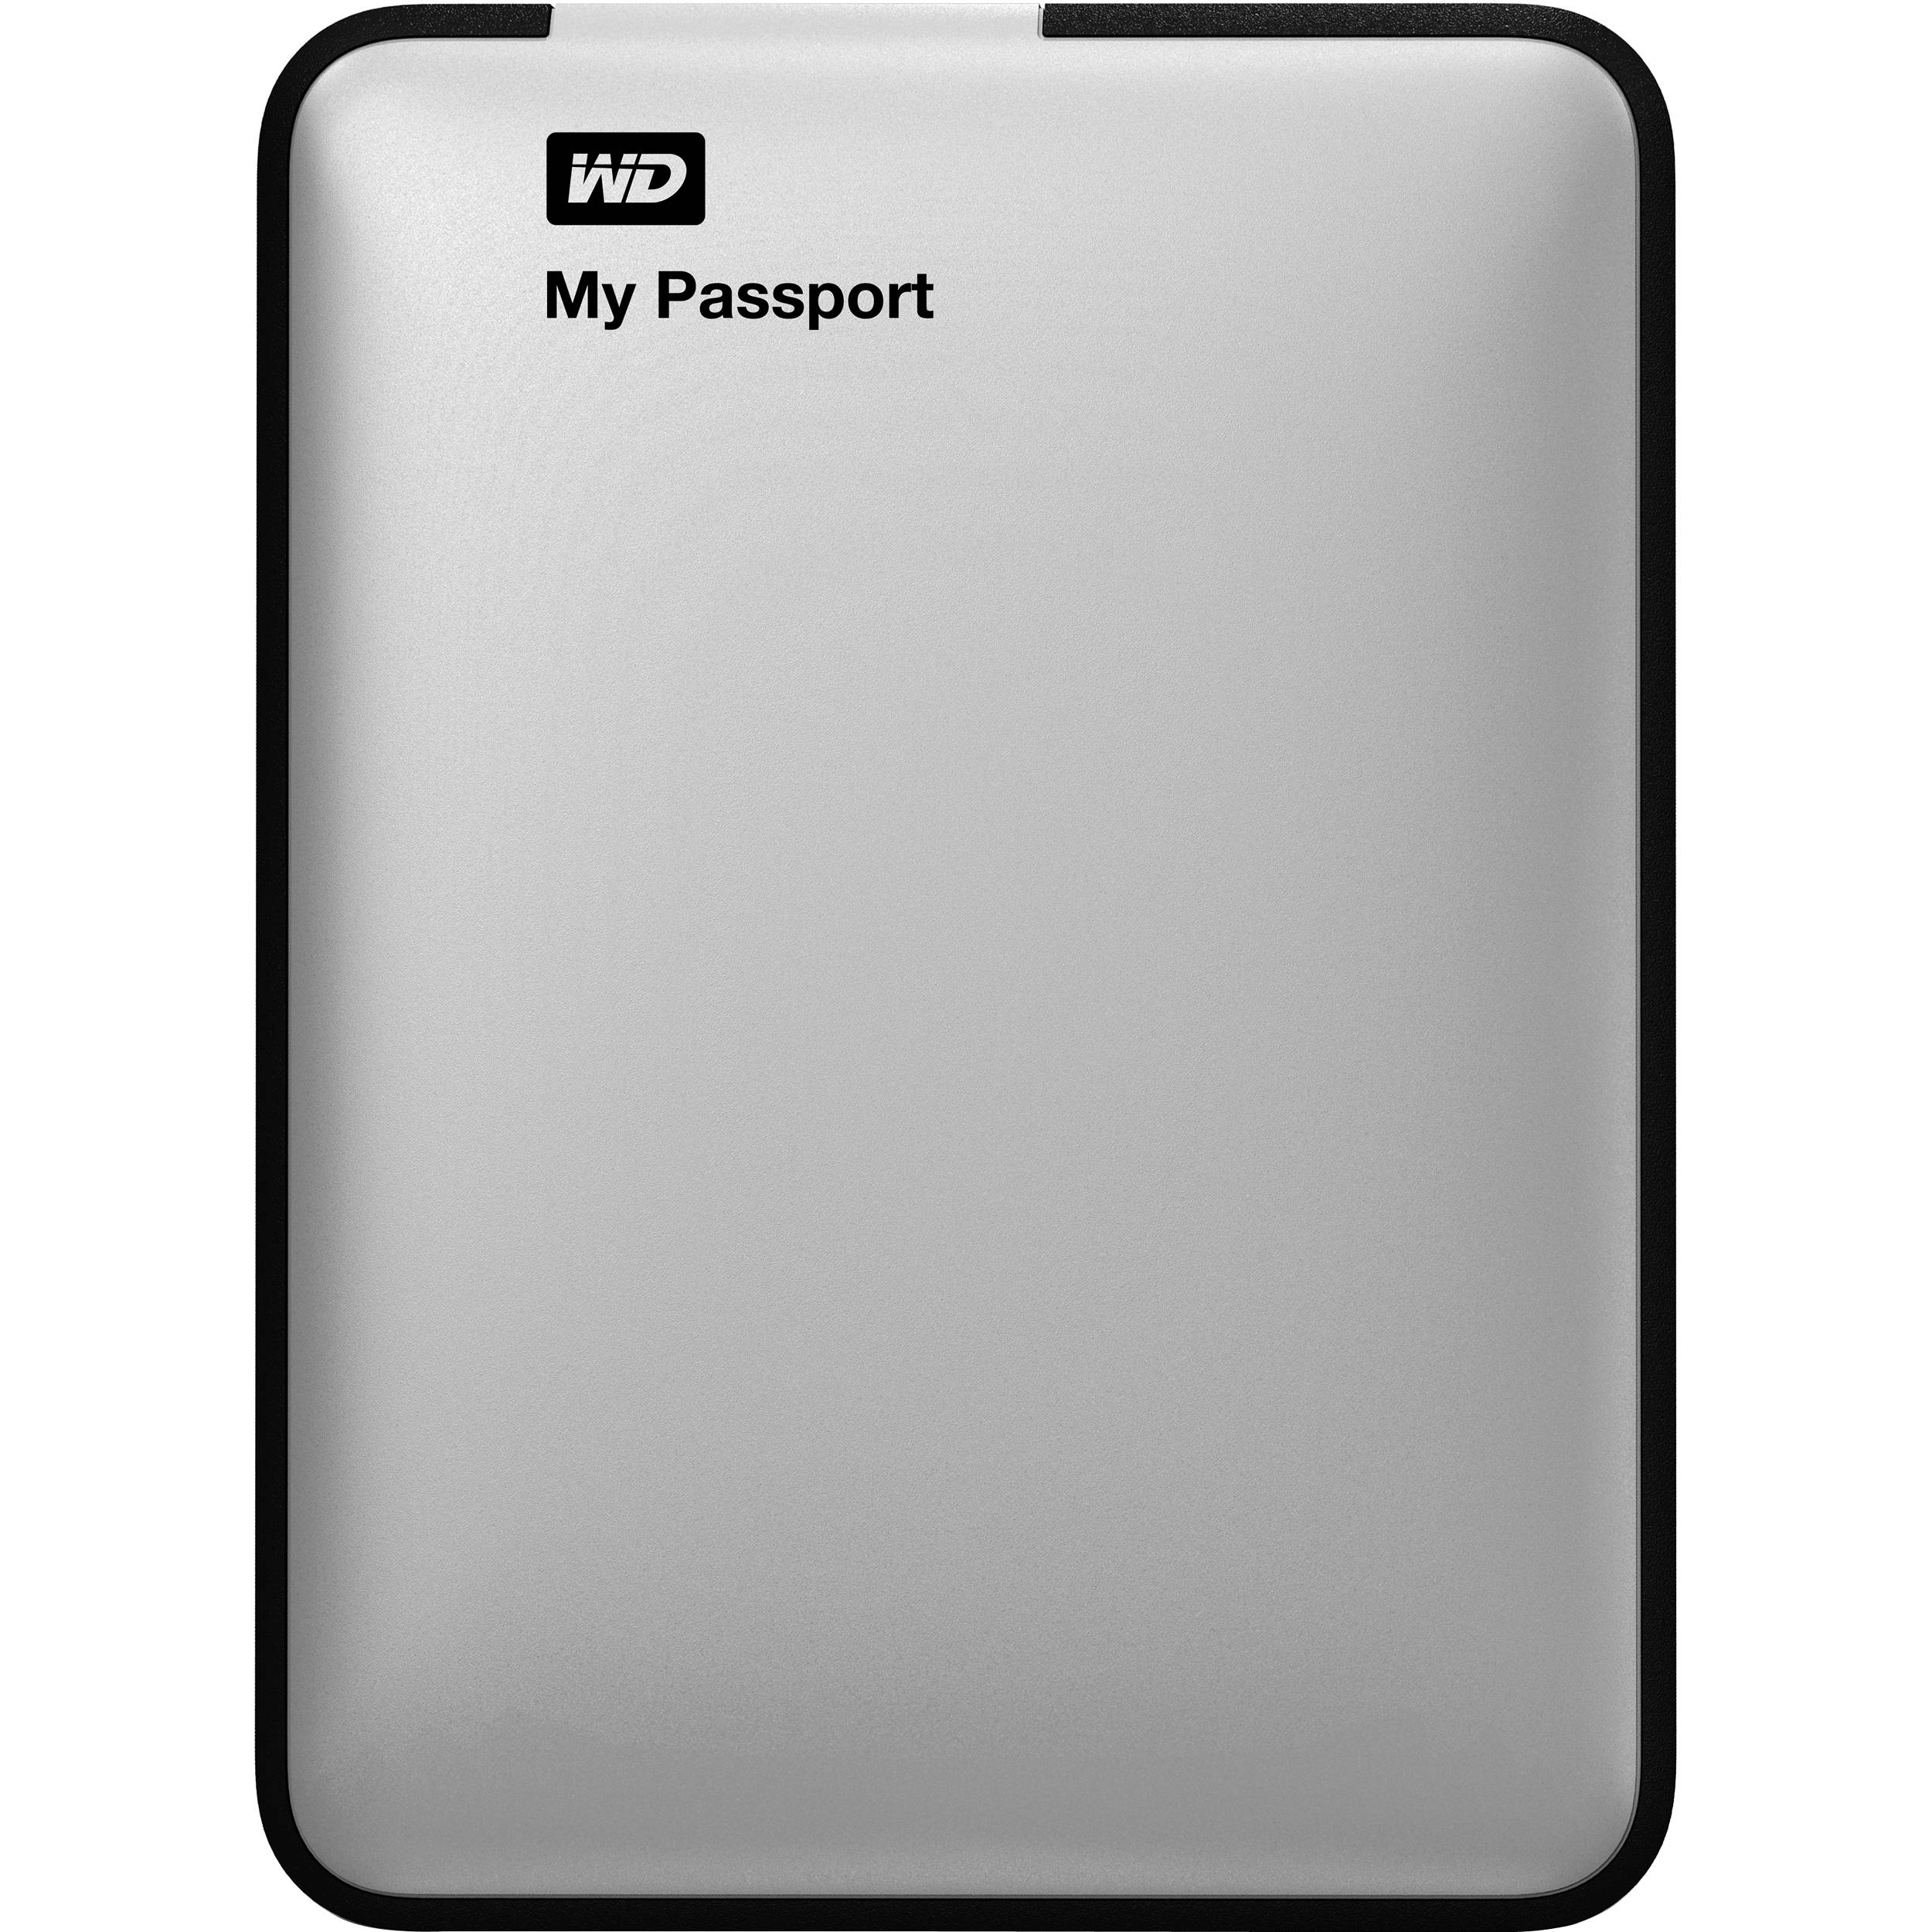 formatting my wd my passport ultra for mac